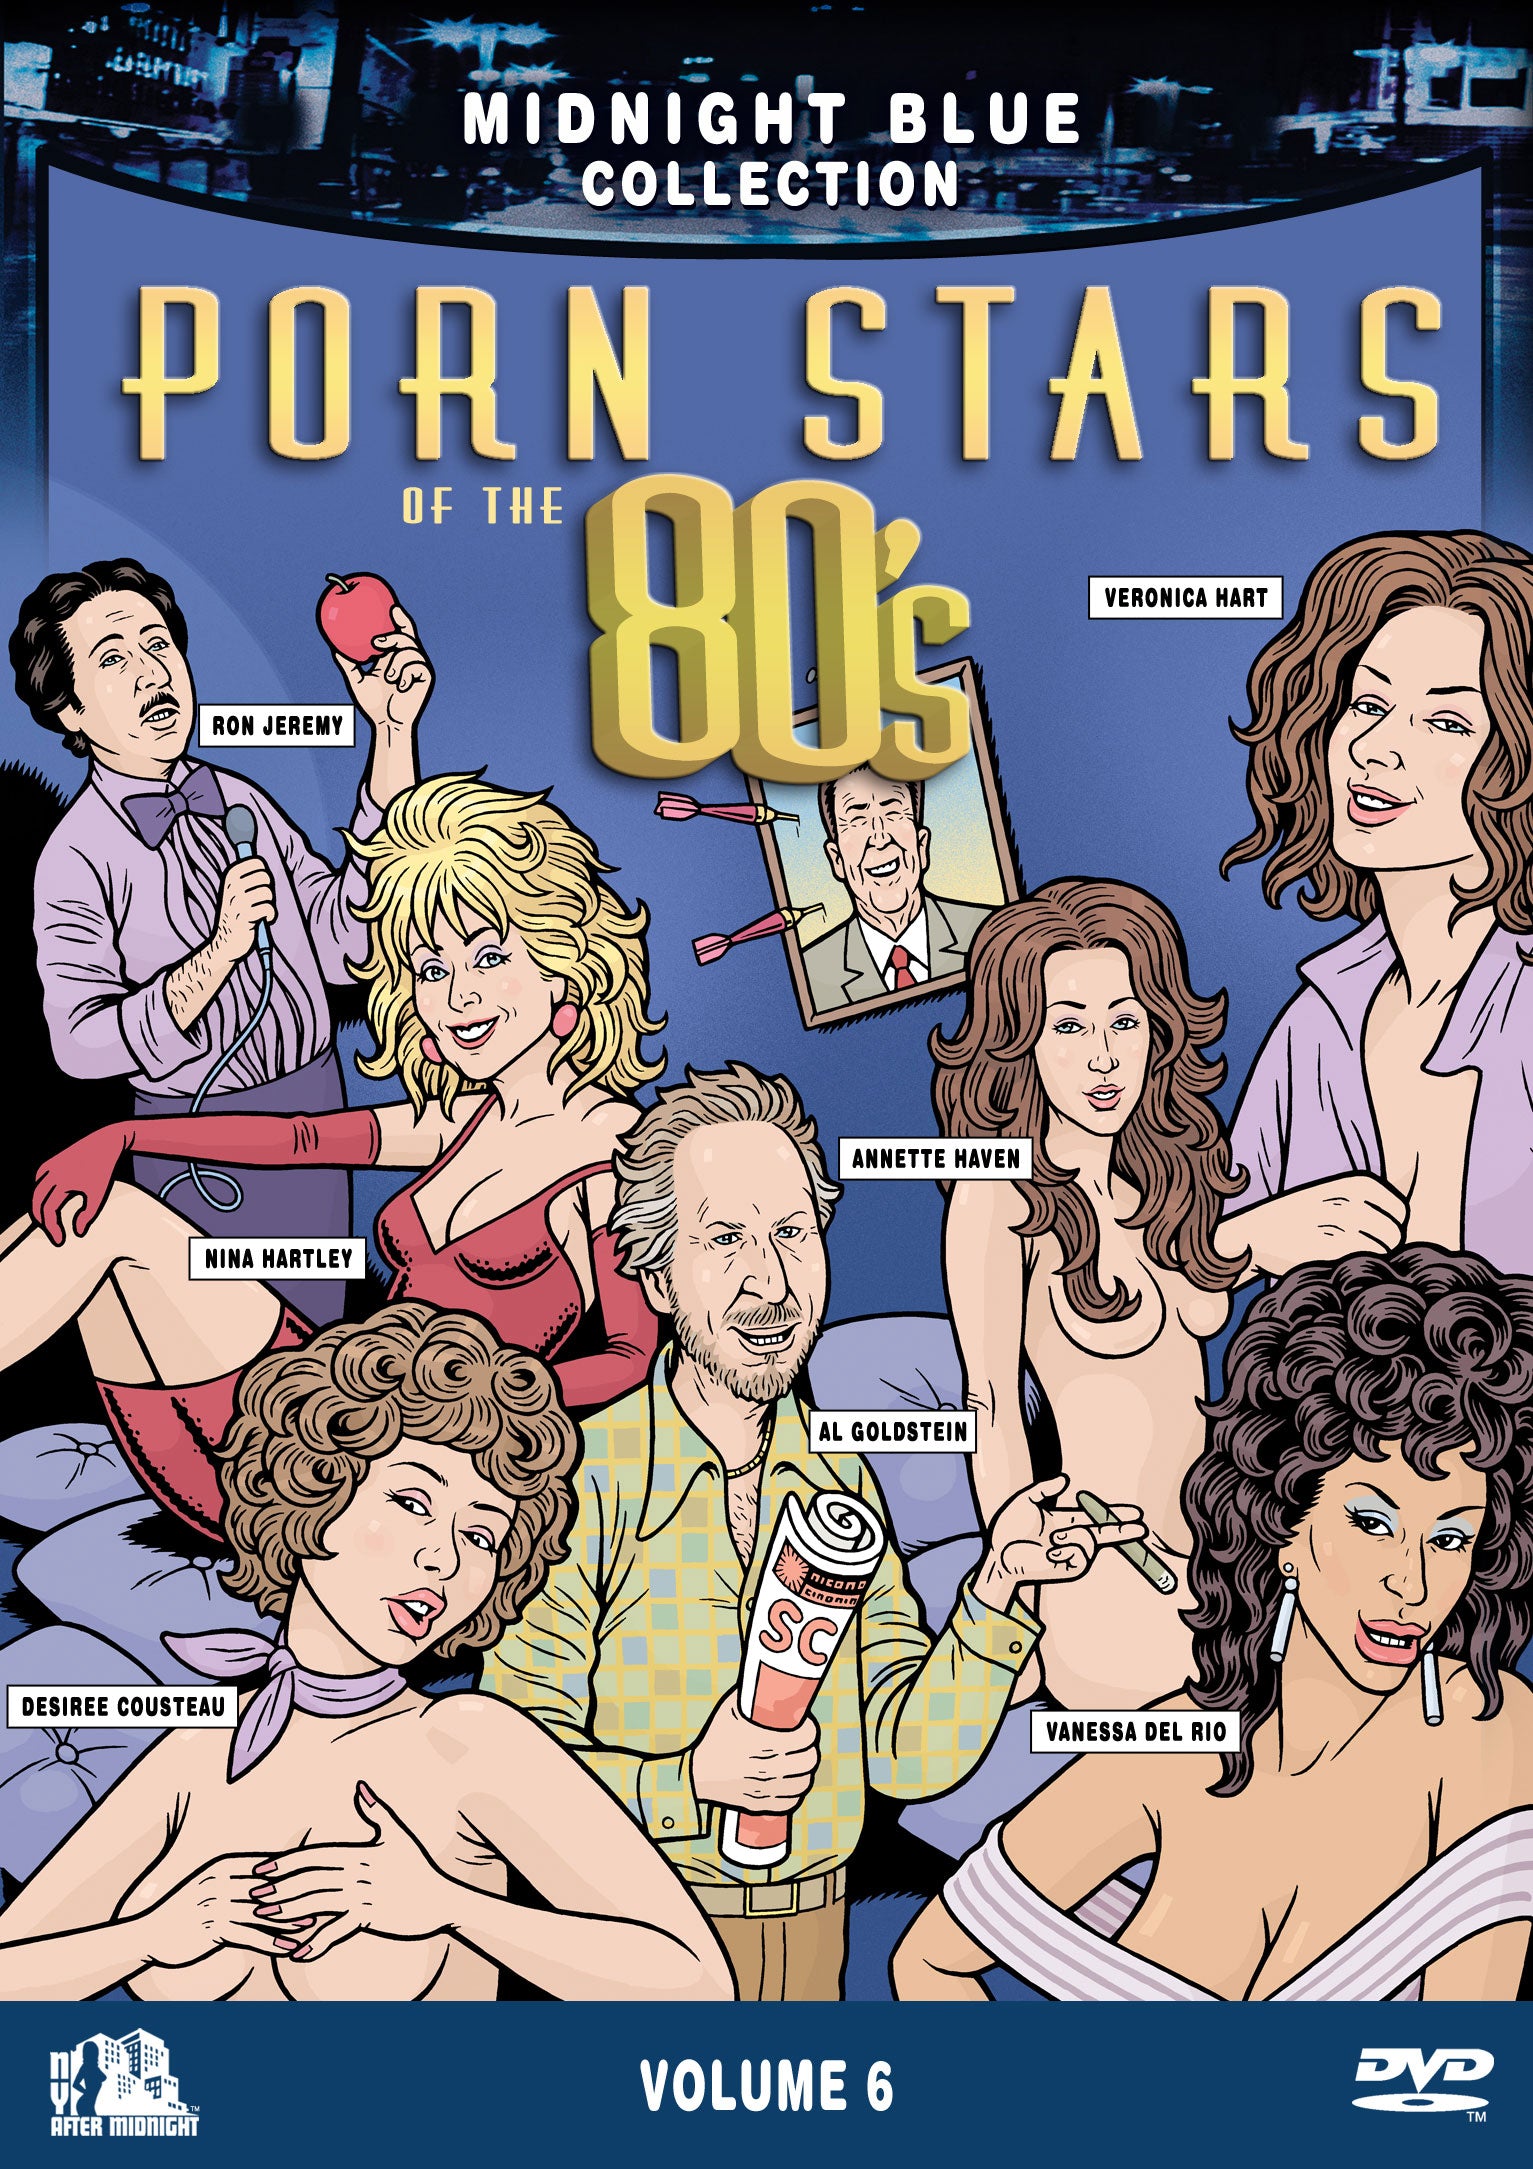 MIDNIGHT BLUE VOLUME 6: PORN STARS OF THE 80S DVD